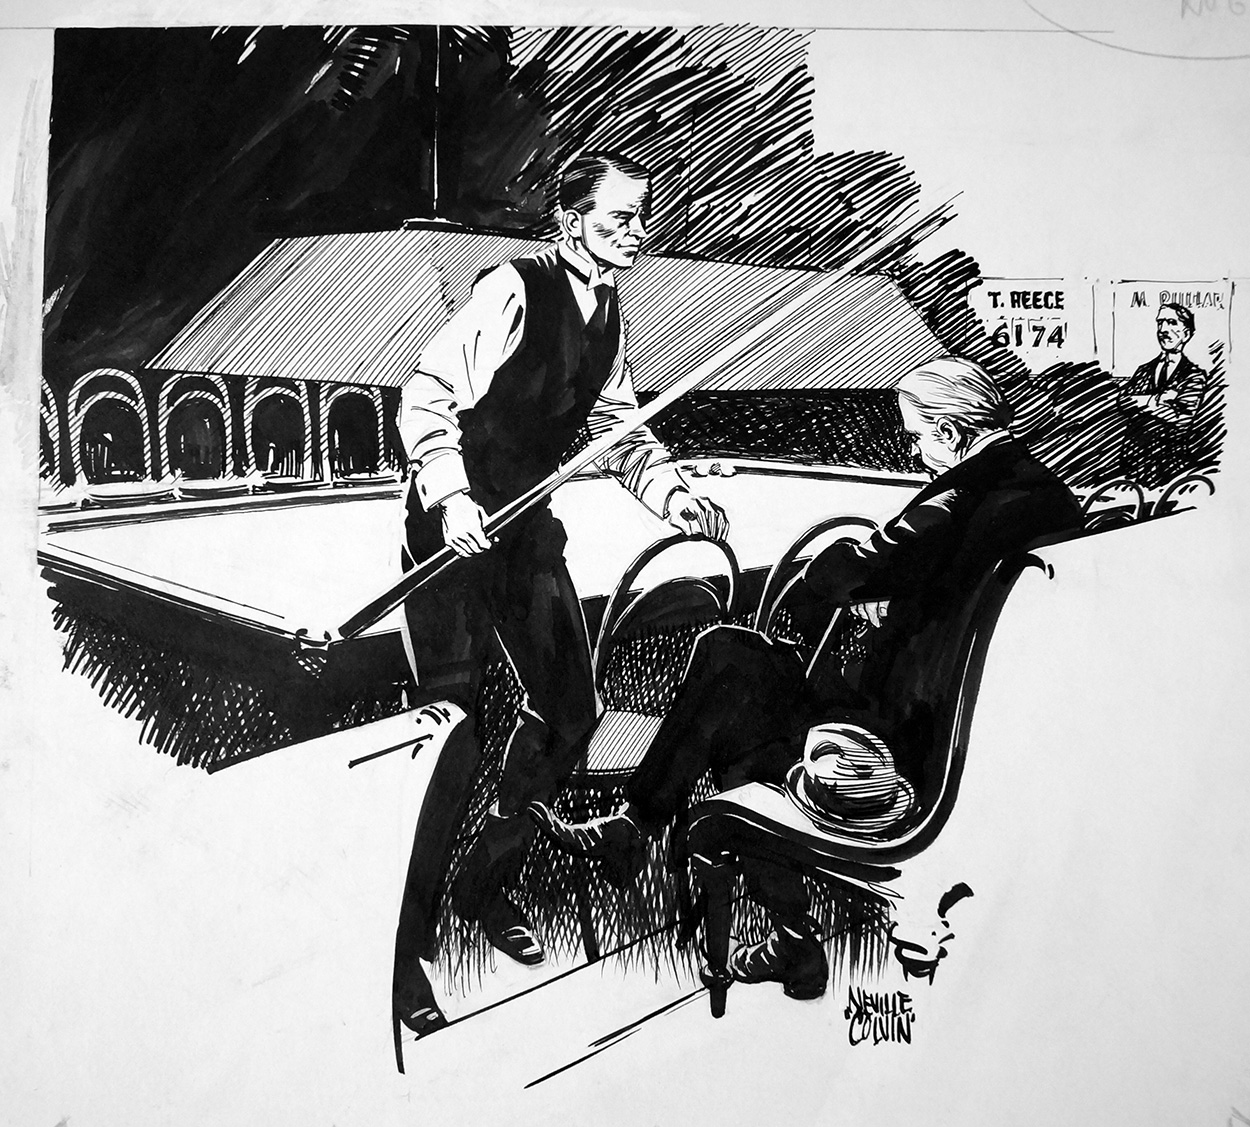 Tom Reece, Billiard Champion (Original) (Signed) art by Newspaper Cartoons (Colvin) at The Illustration Art Gallery